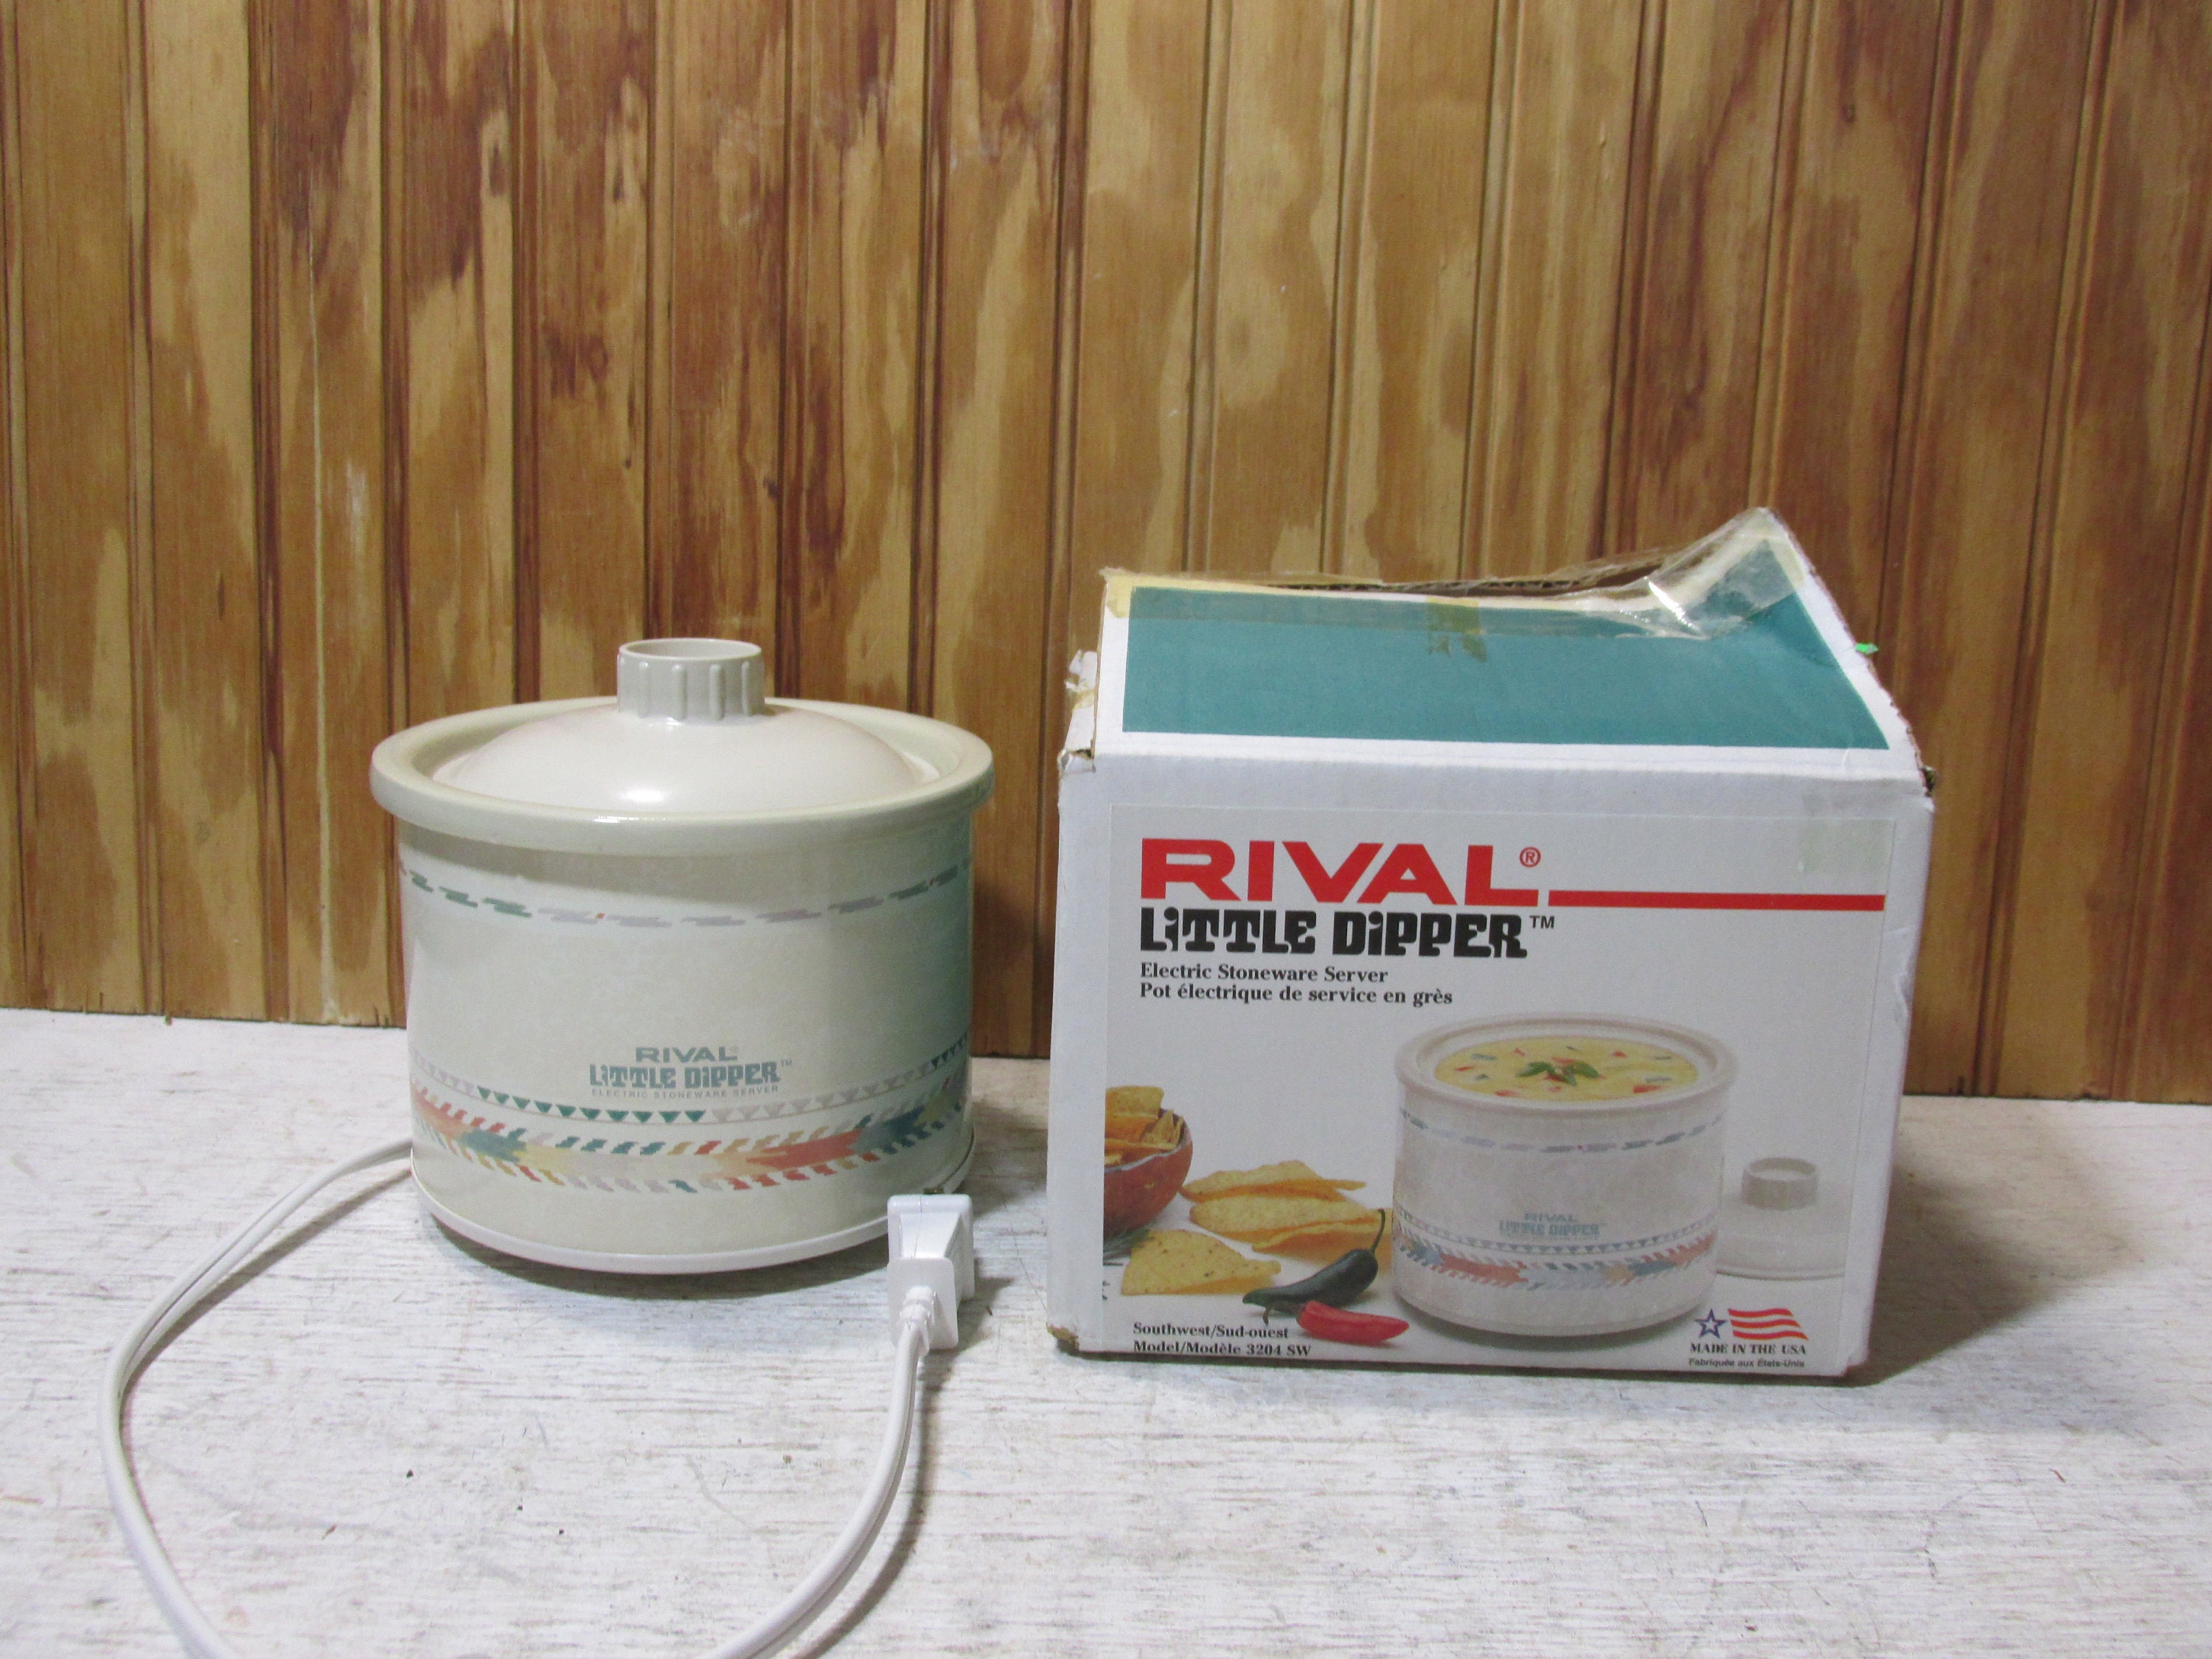 Rival Little Dipper Model 3204 Electric Stoneware Server Crock Pot TESTED  WORKS